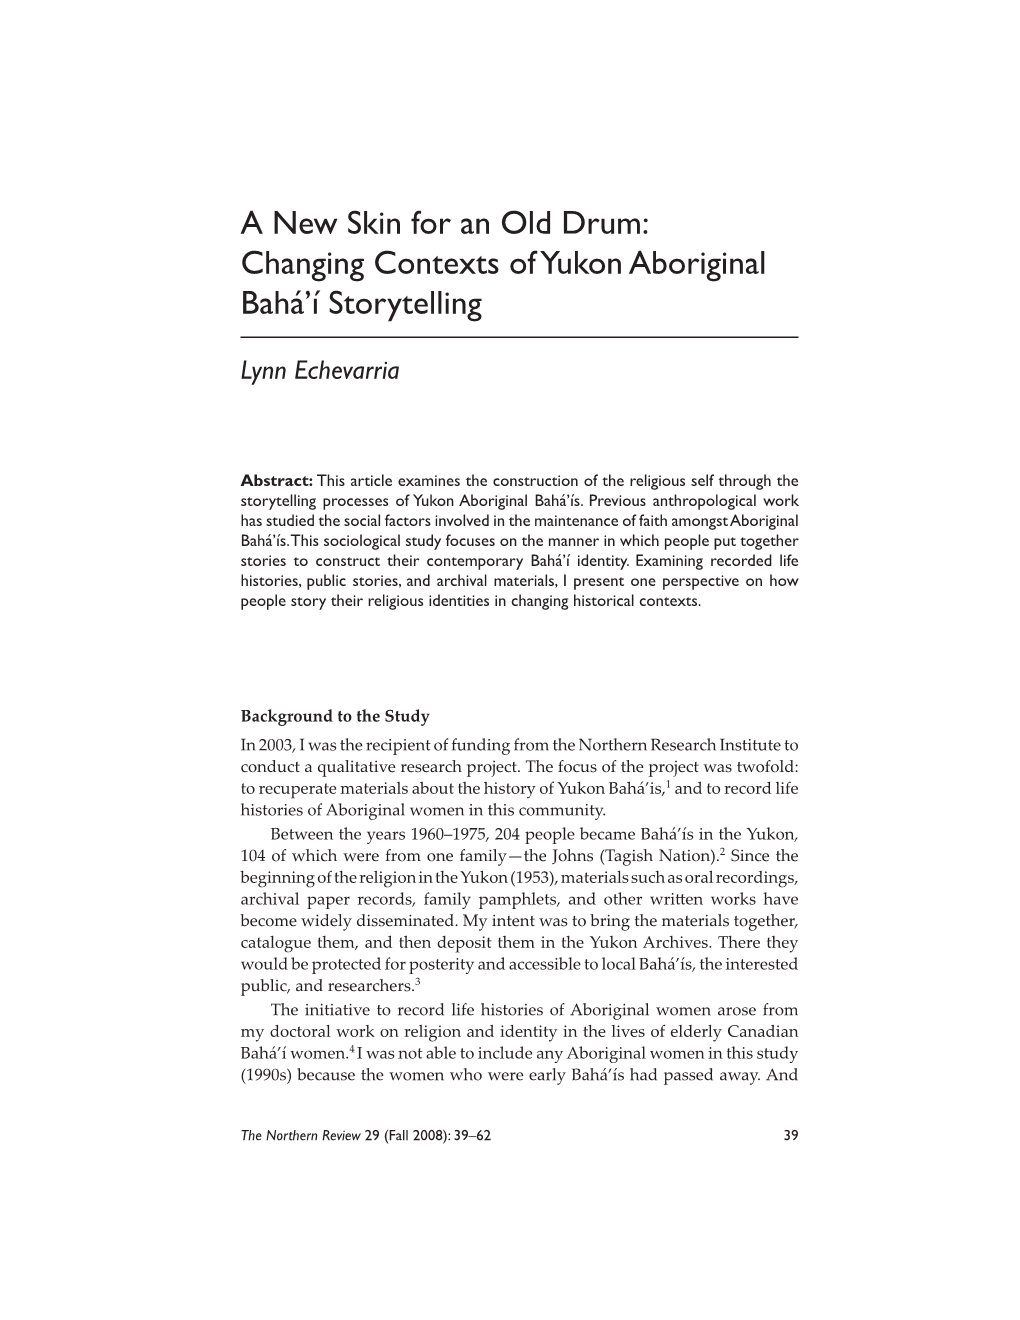 Changing Contexts of Yukon Aboriginal Bahá'í Storytelling